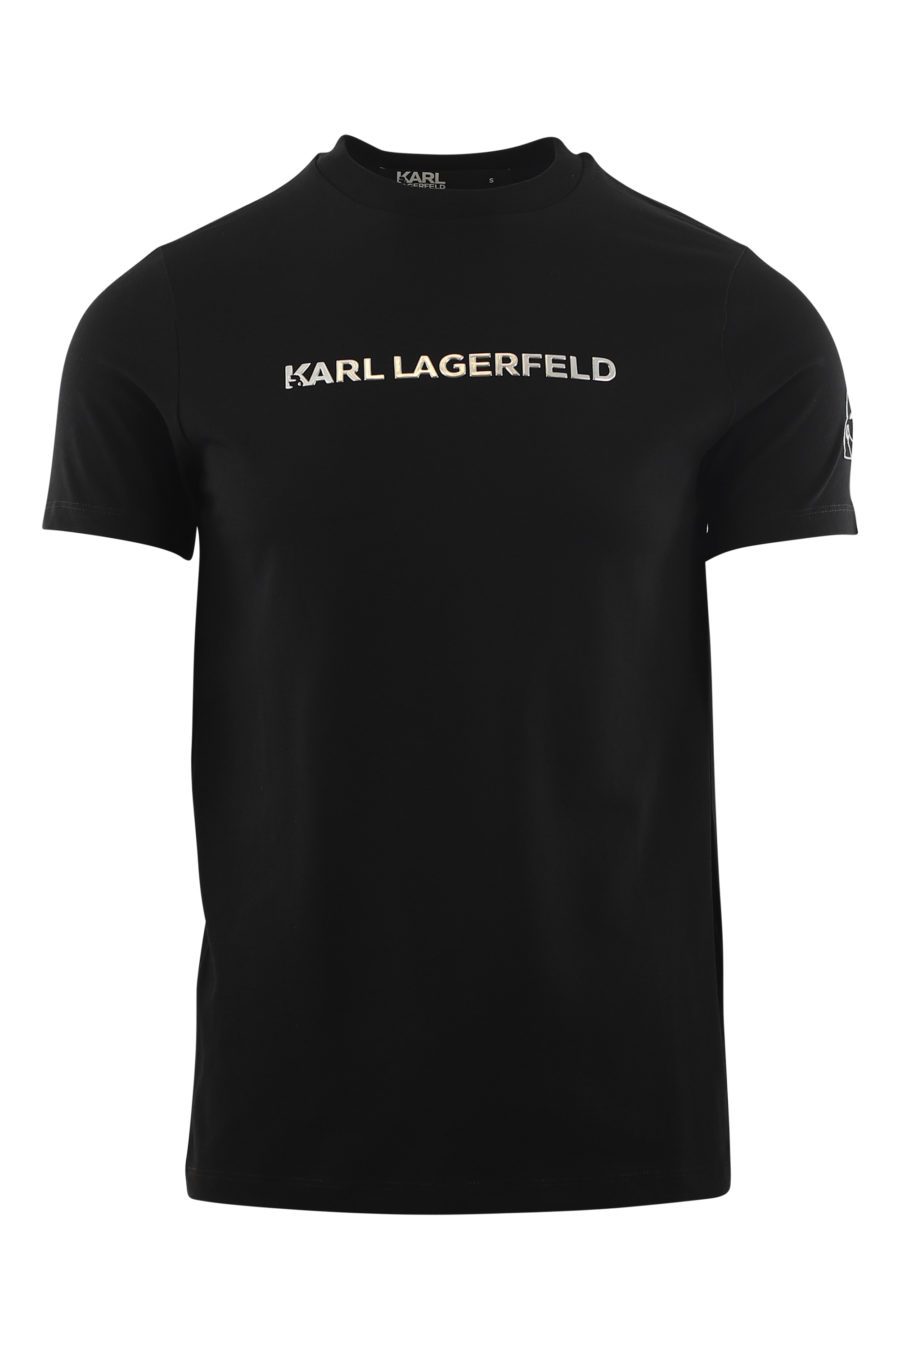 Camiseta negra con logo plateado en relieve - IMG 6557